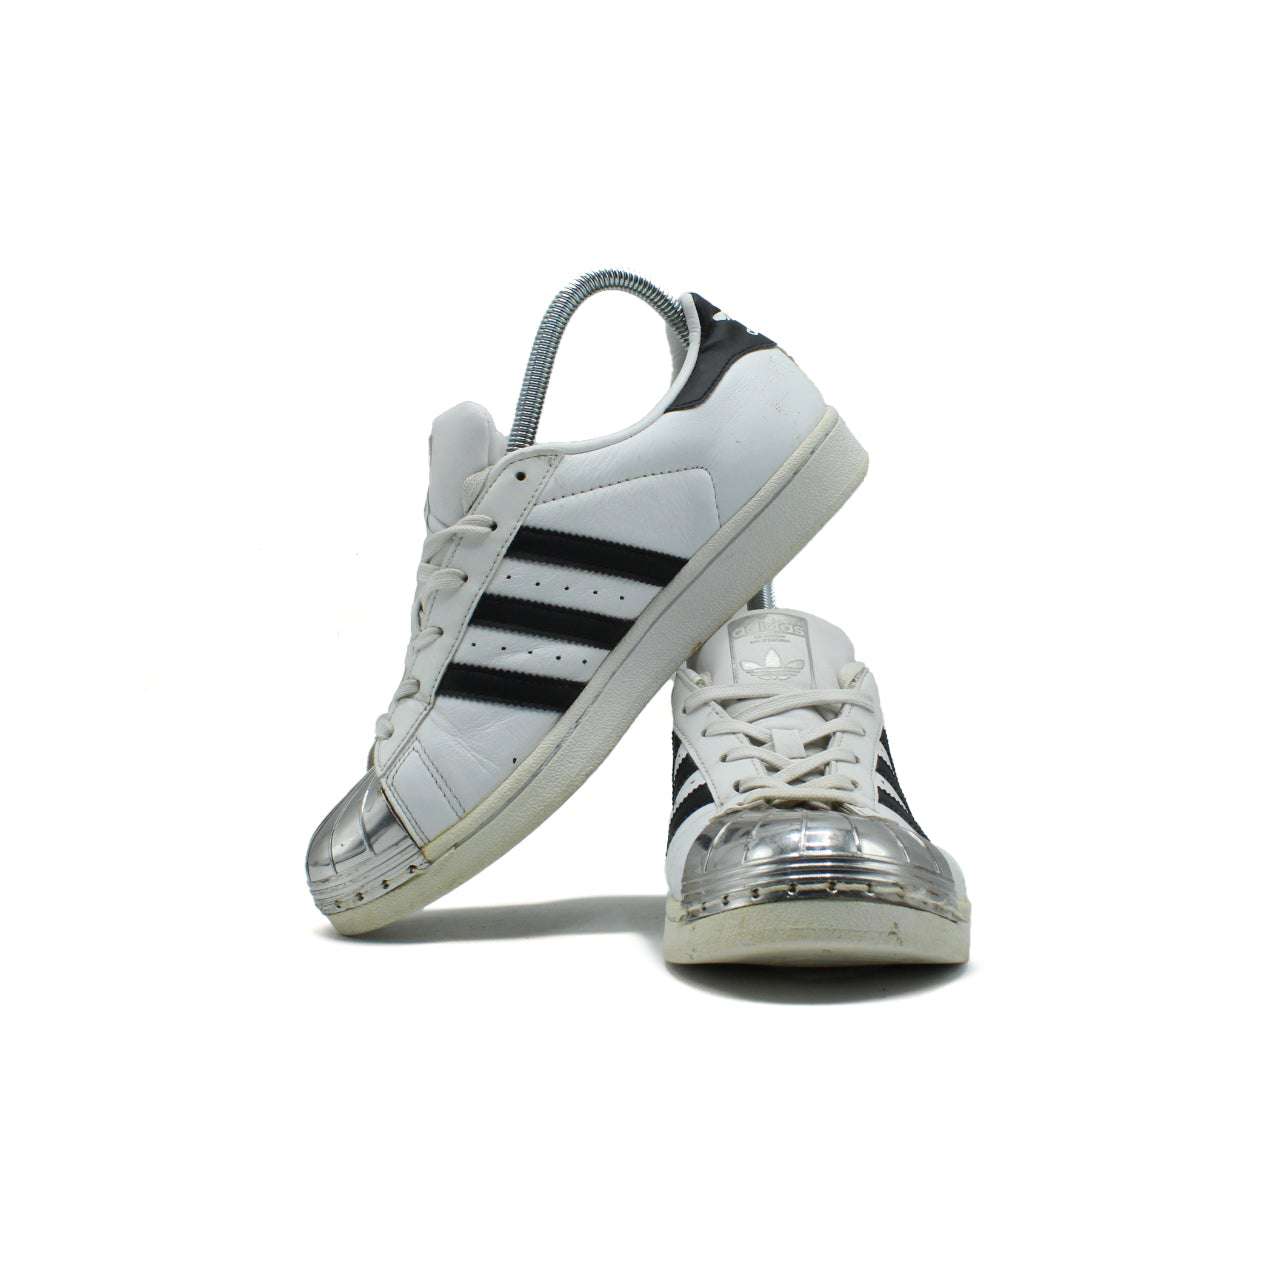 Adidas originals Superstar Metal Toe White